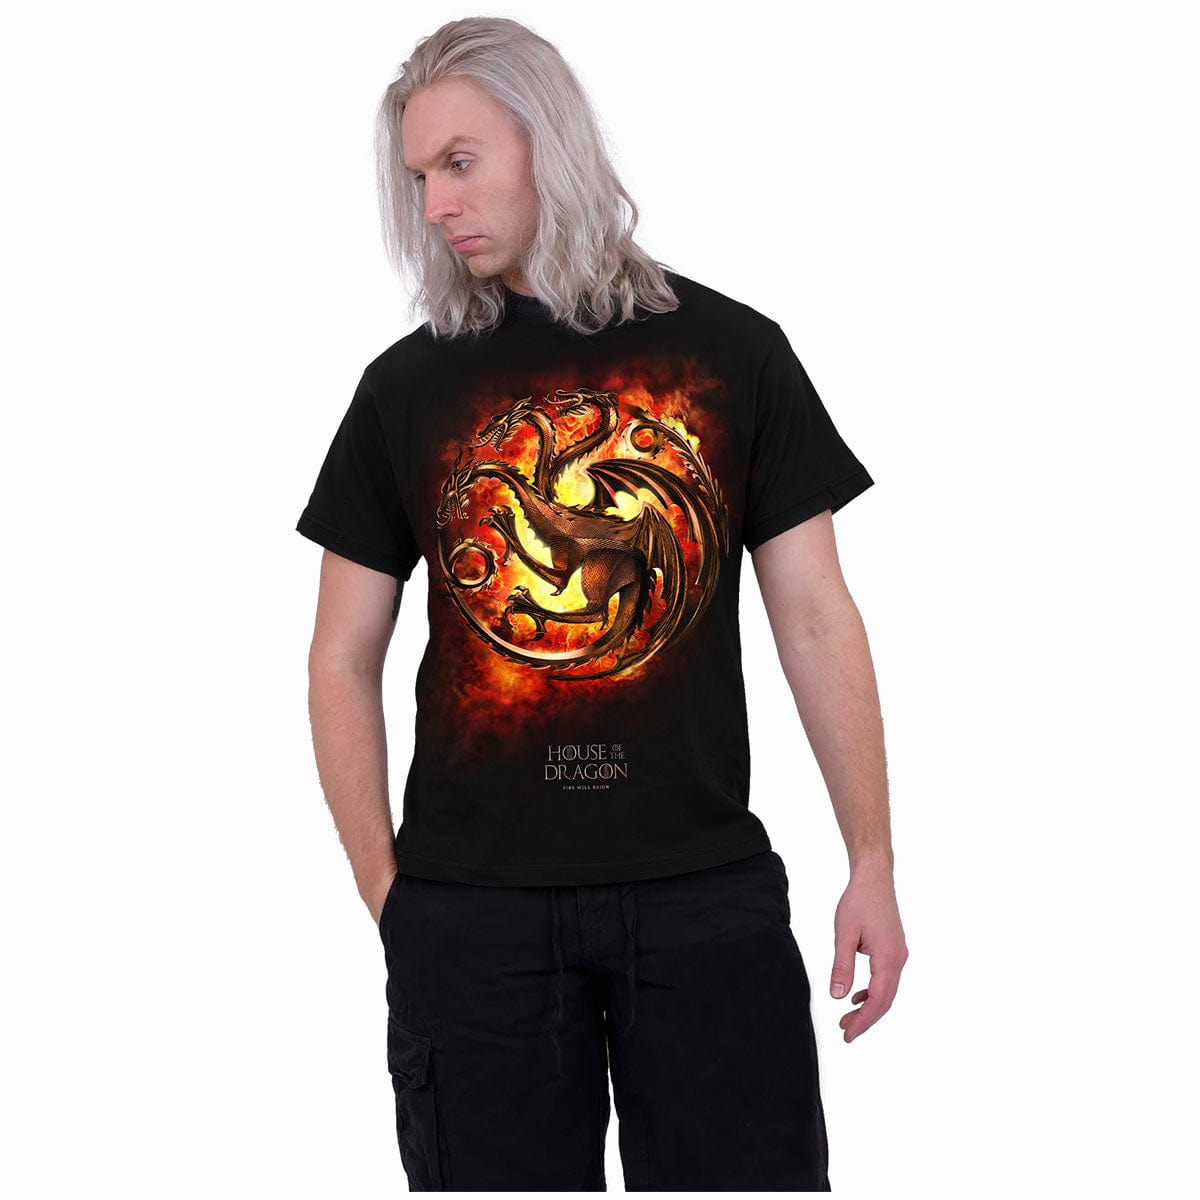 HOD - DRAGON FLAMES - Front Print T-Shirt Black - Spiral USA